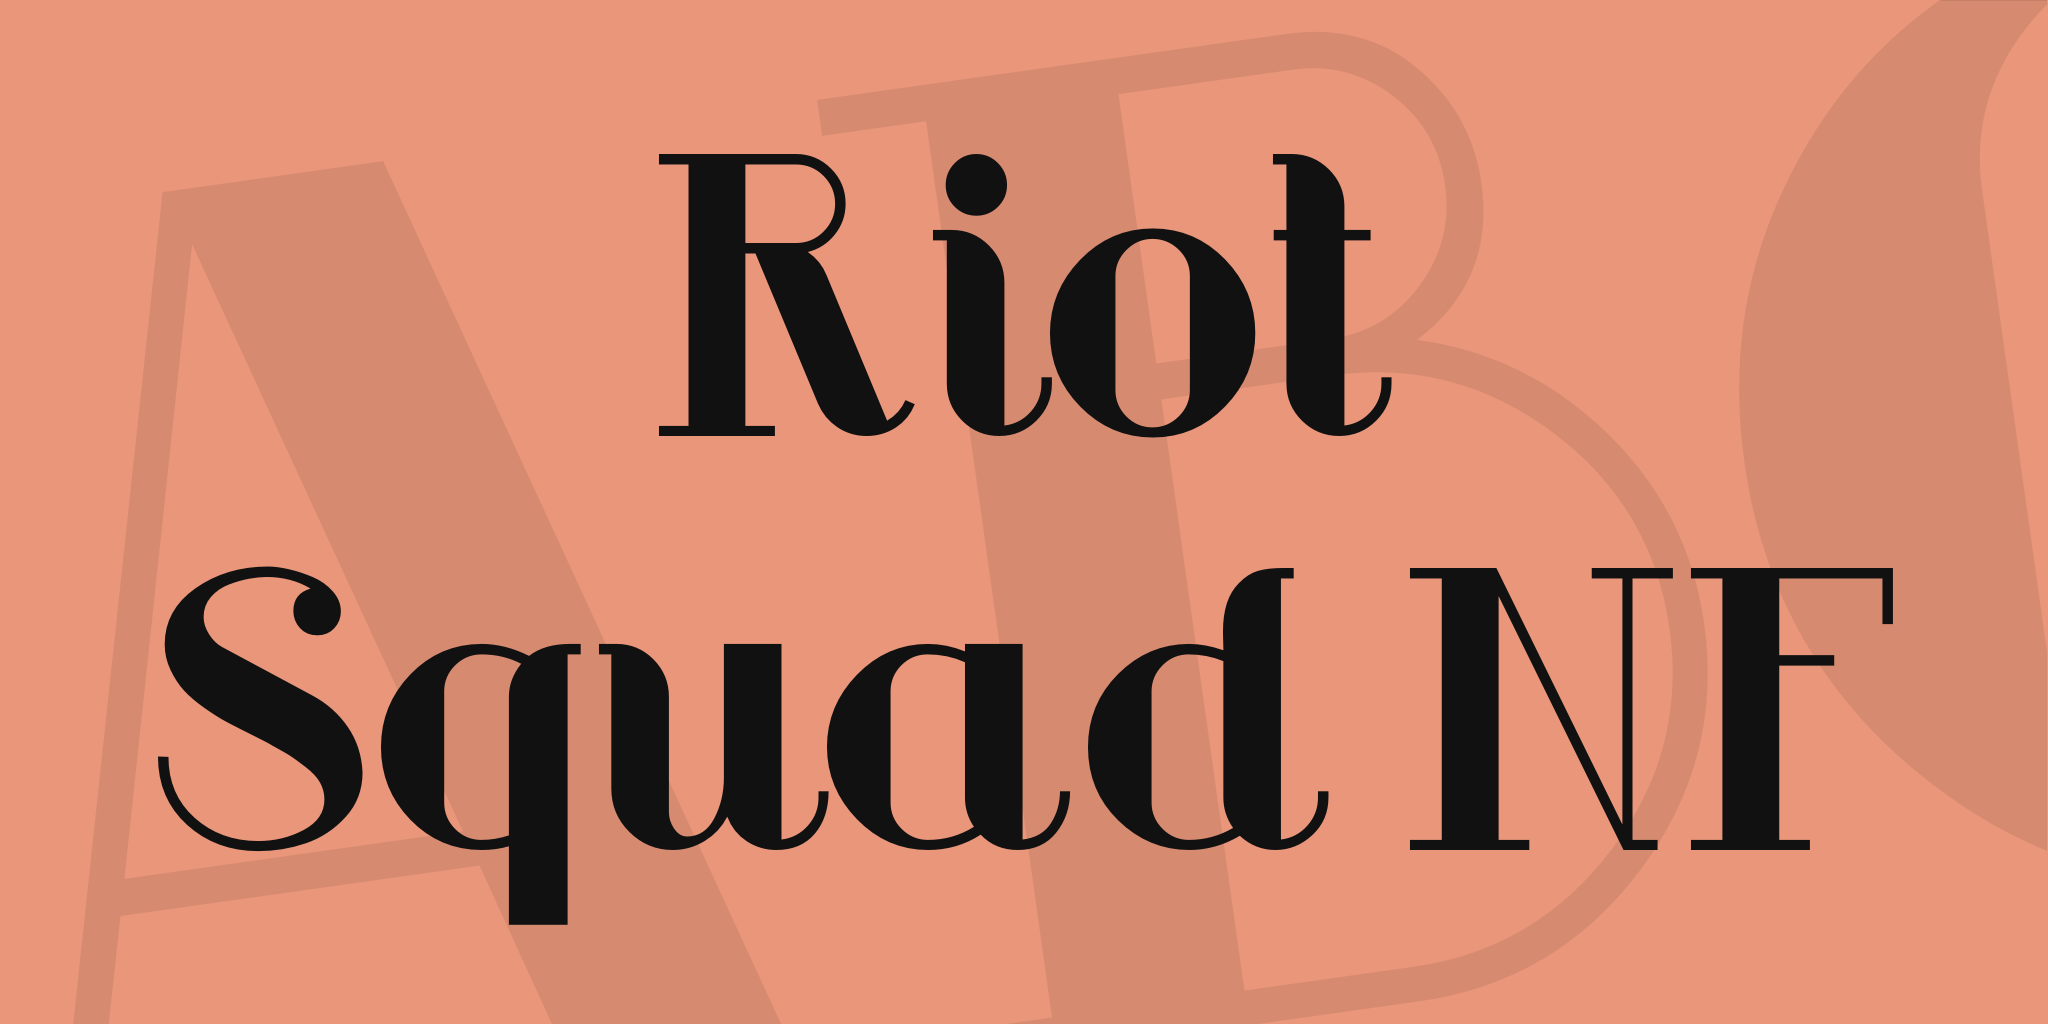 Riot Squad Nf